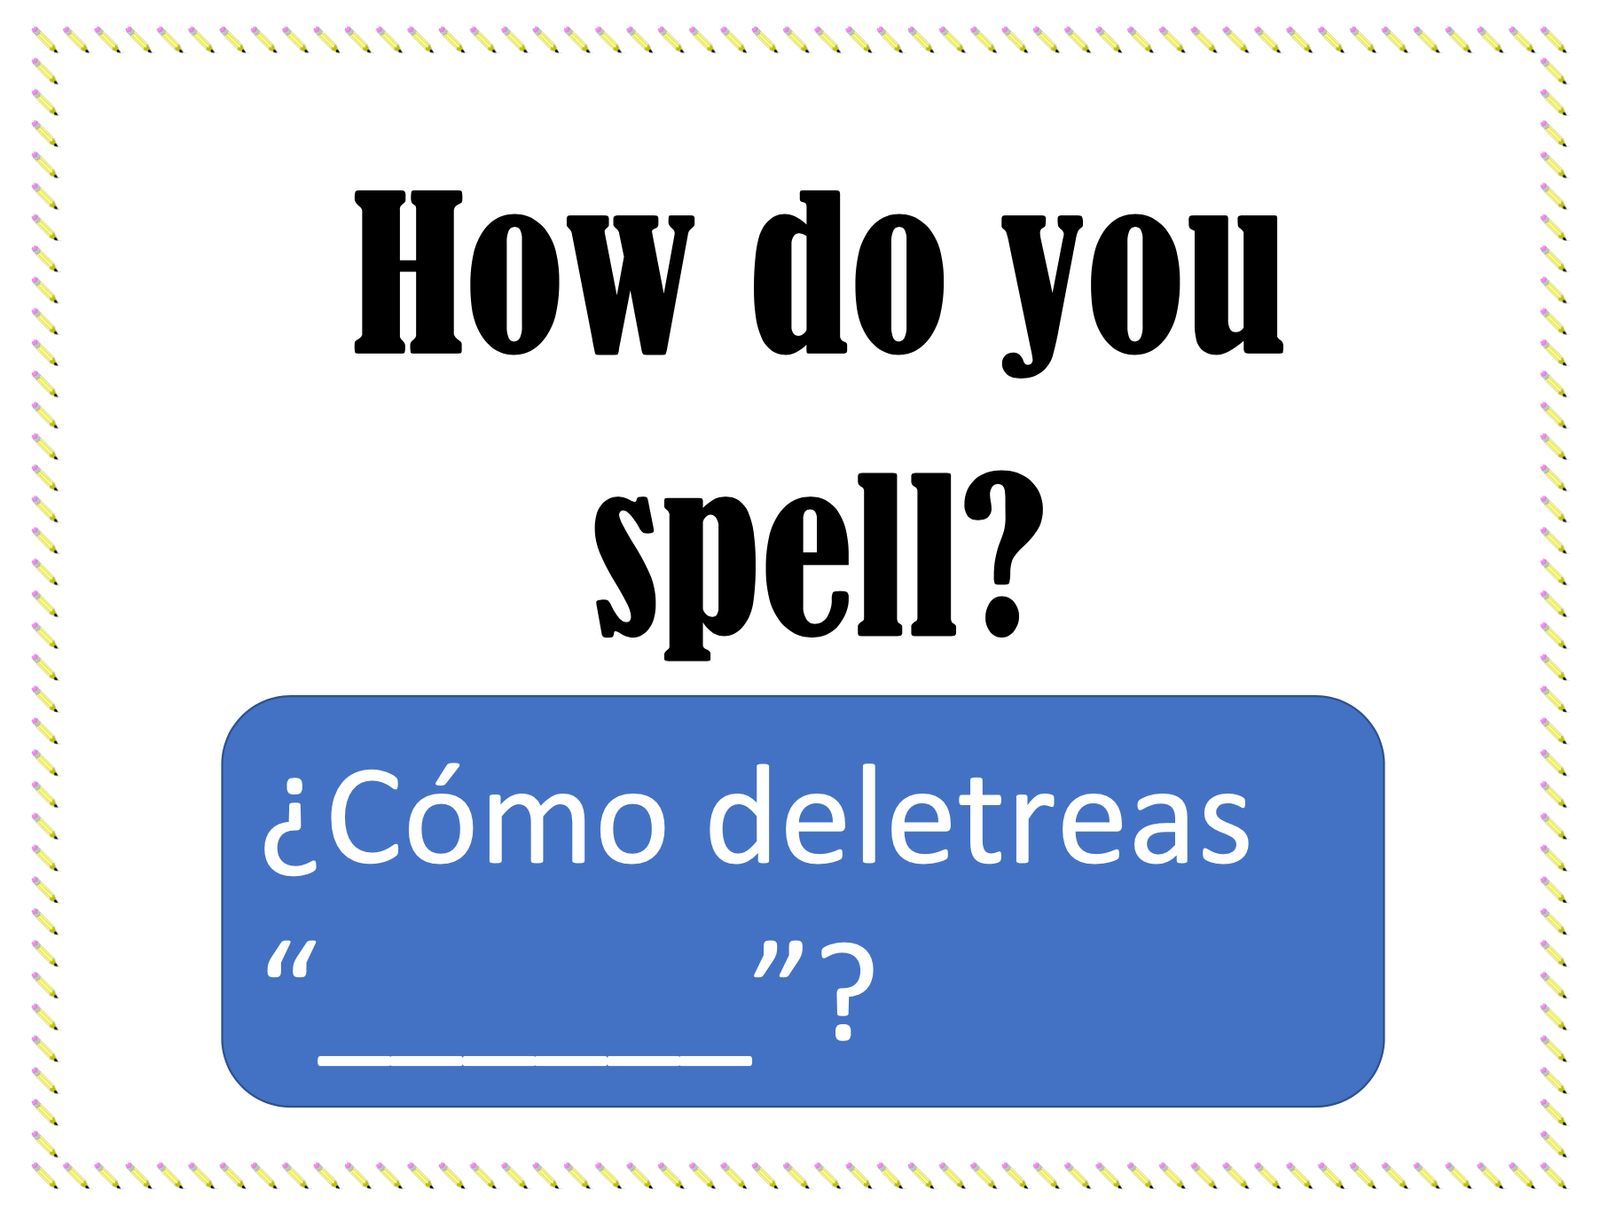 Bilingual spelling question illustration